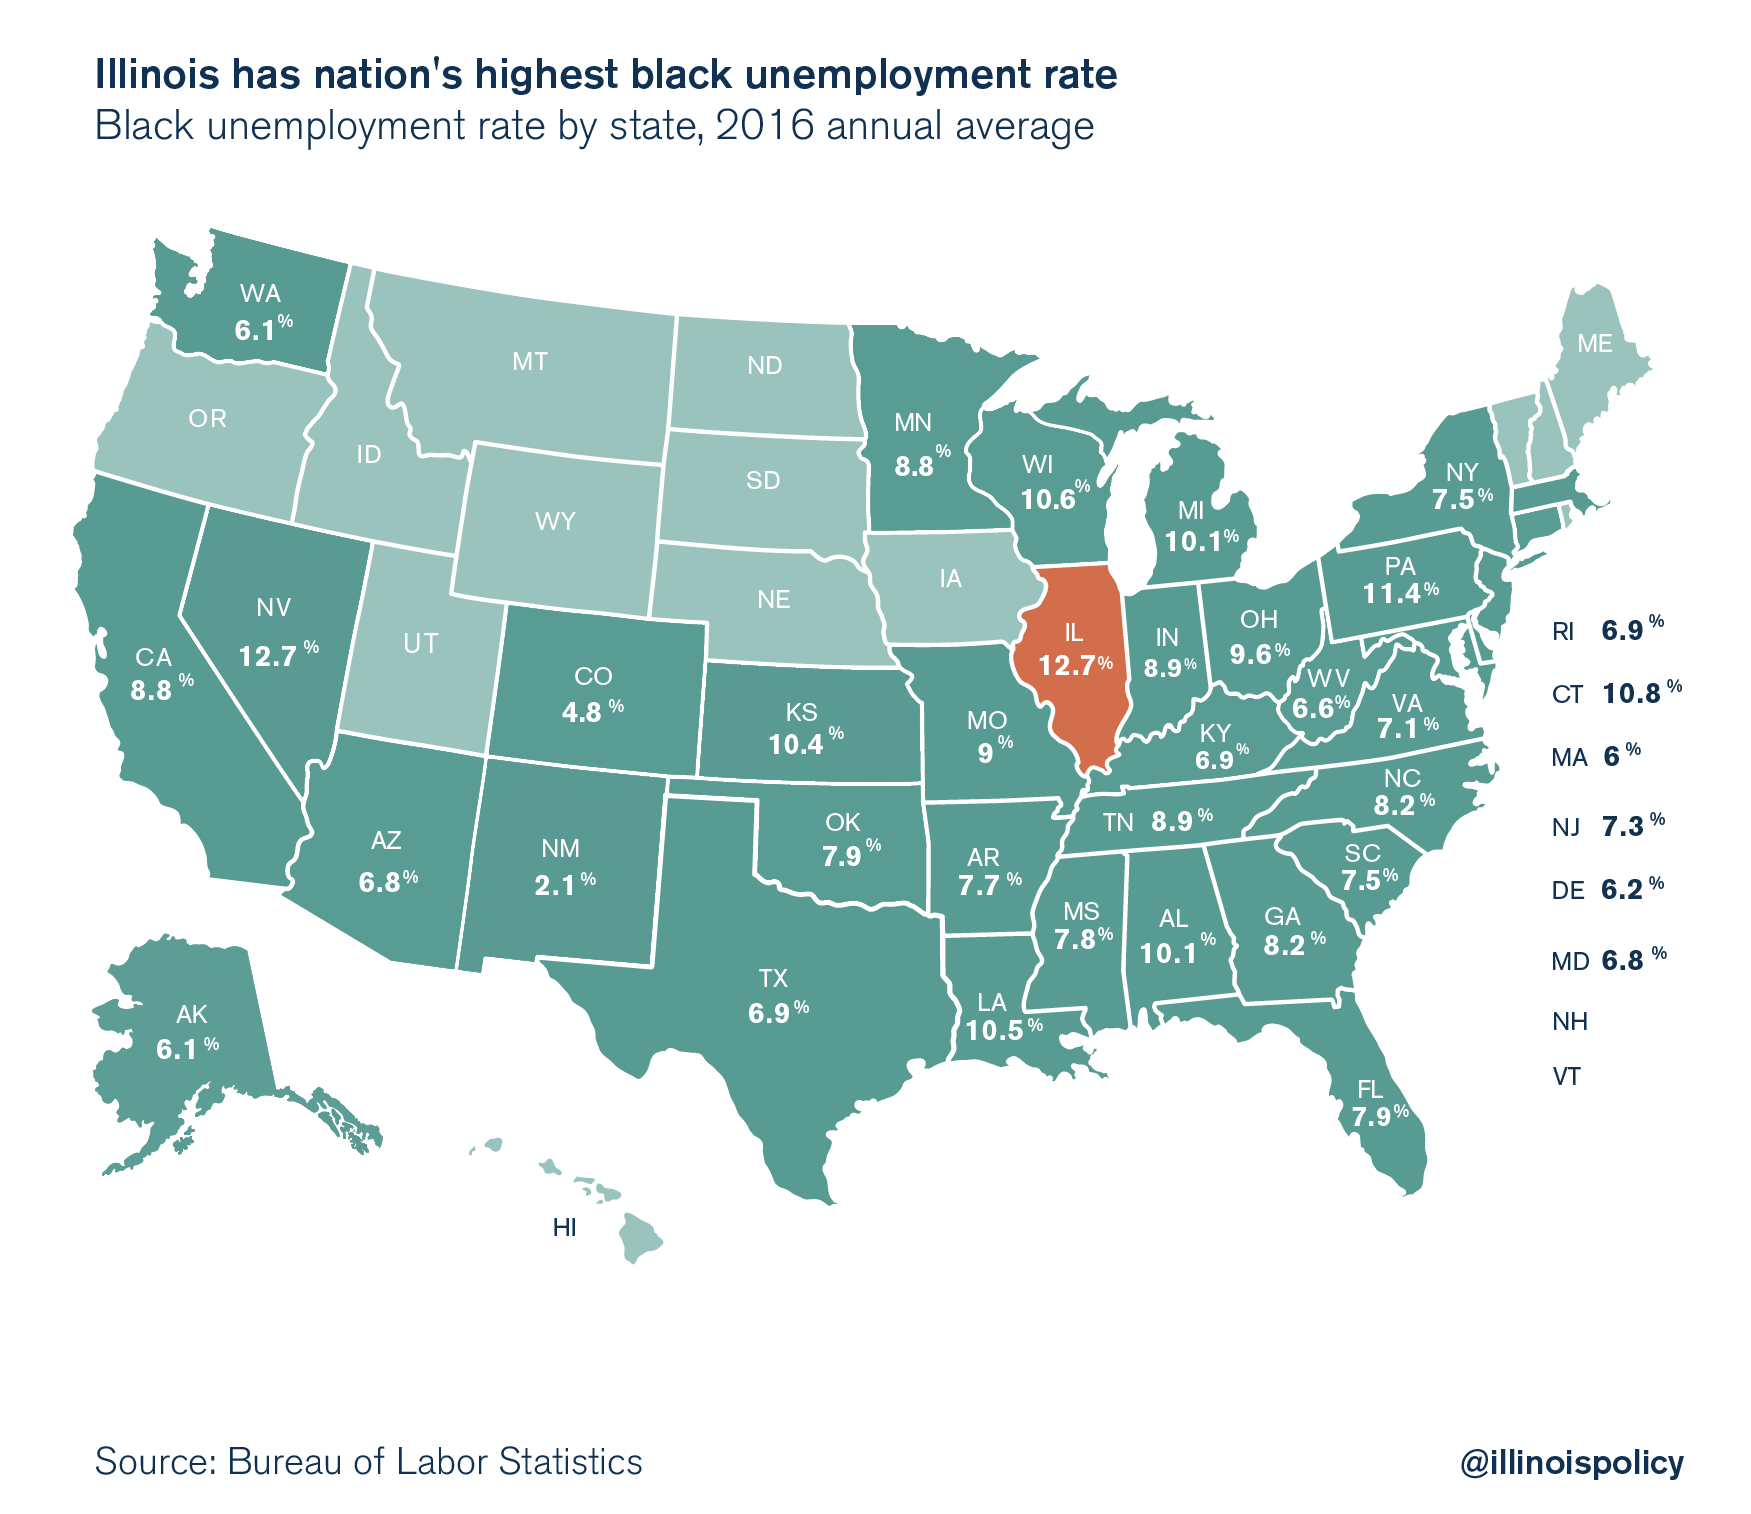 Illinois has the nationâs highest black unemployment rate